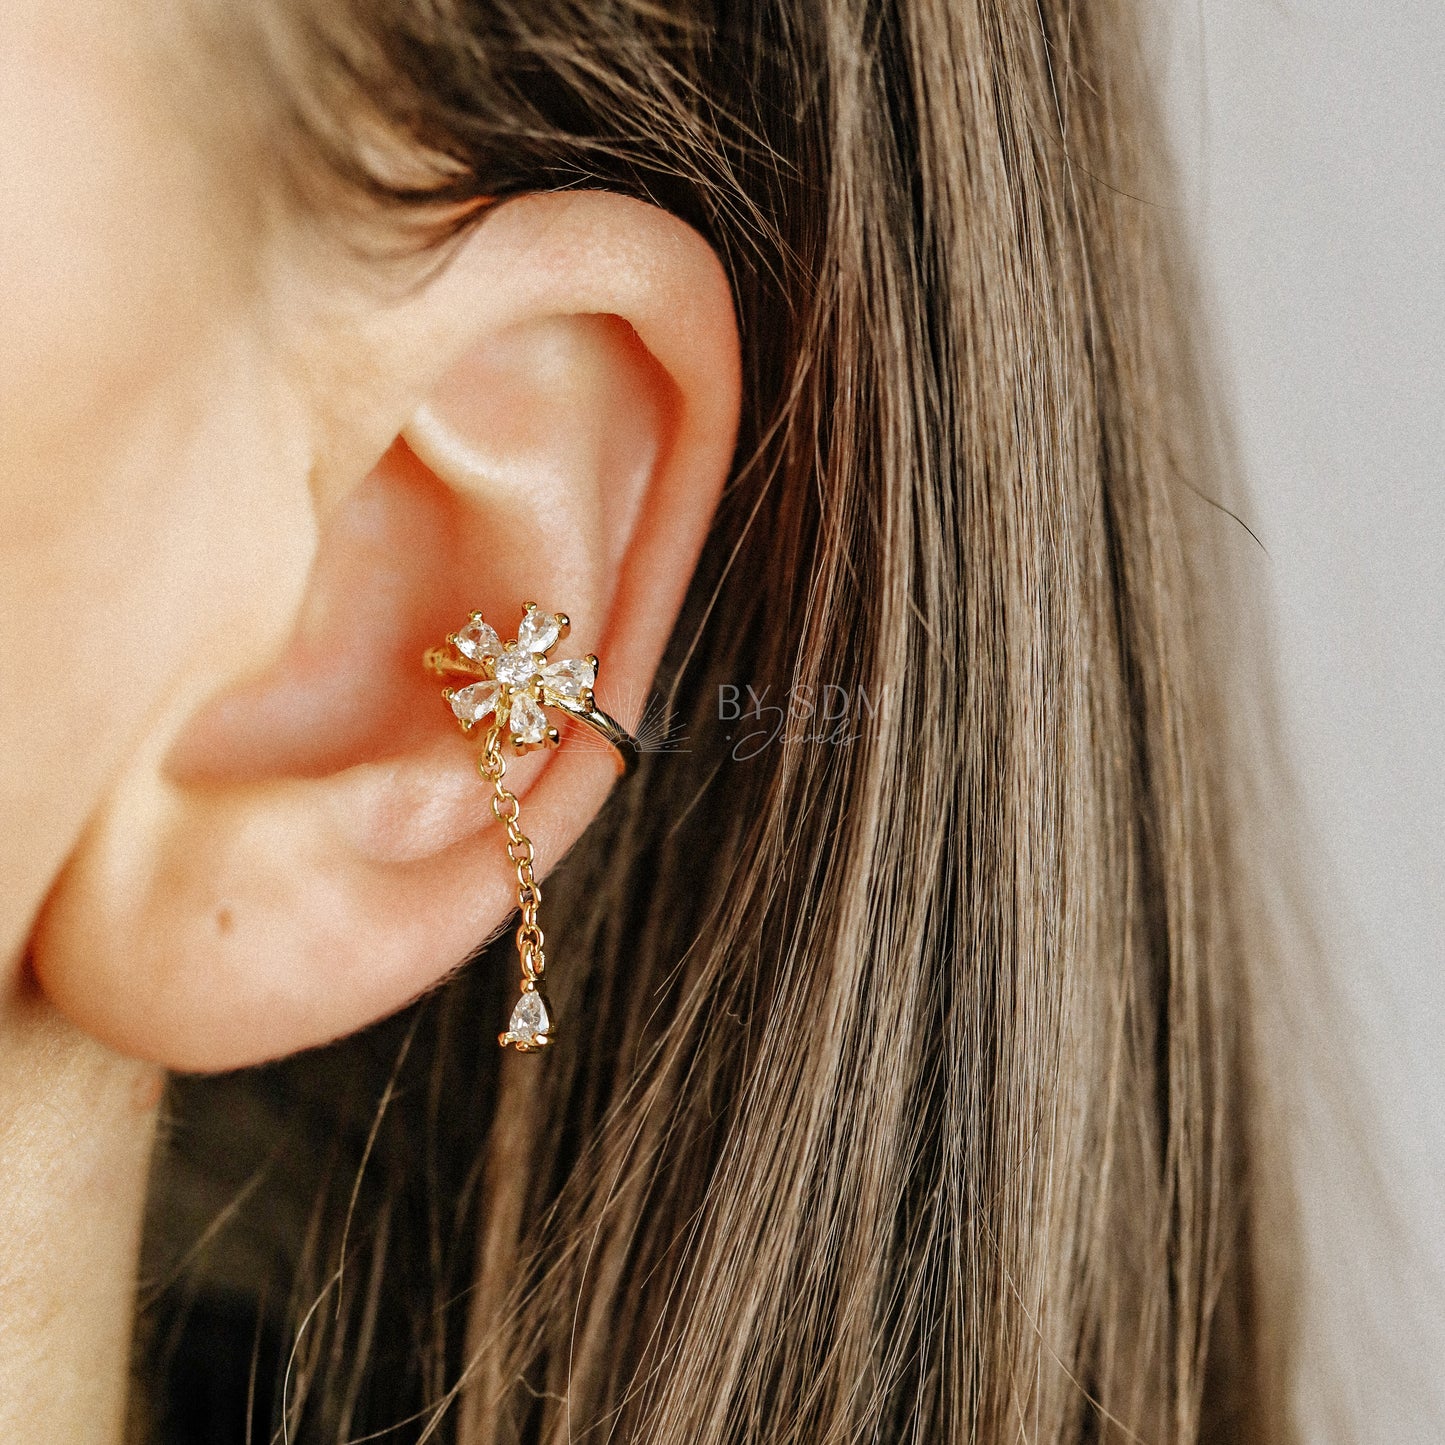 Conch Cubic Zirconia Flower Ear Cuff Earring • Silver, Gold • BYSDMJEWELS